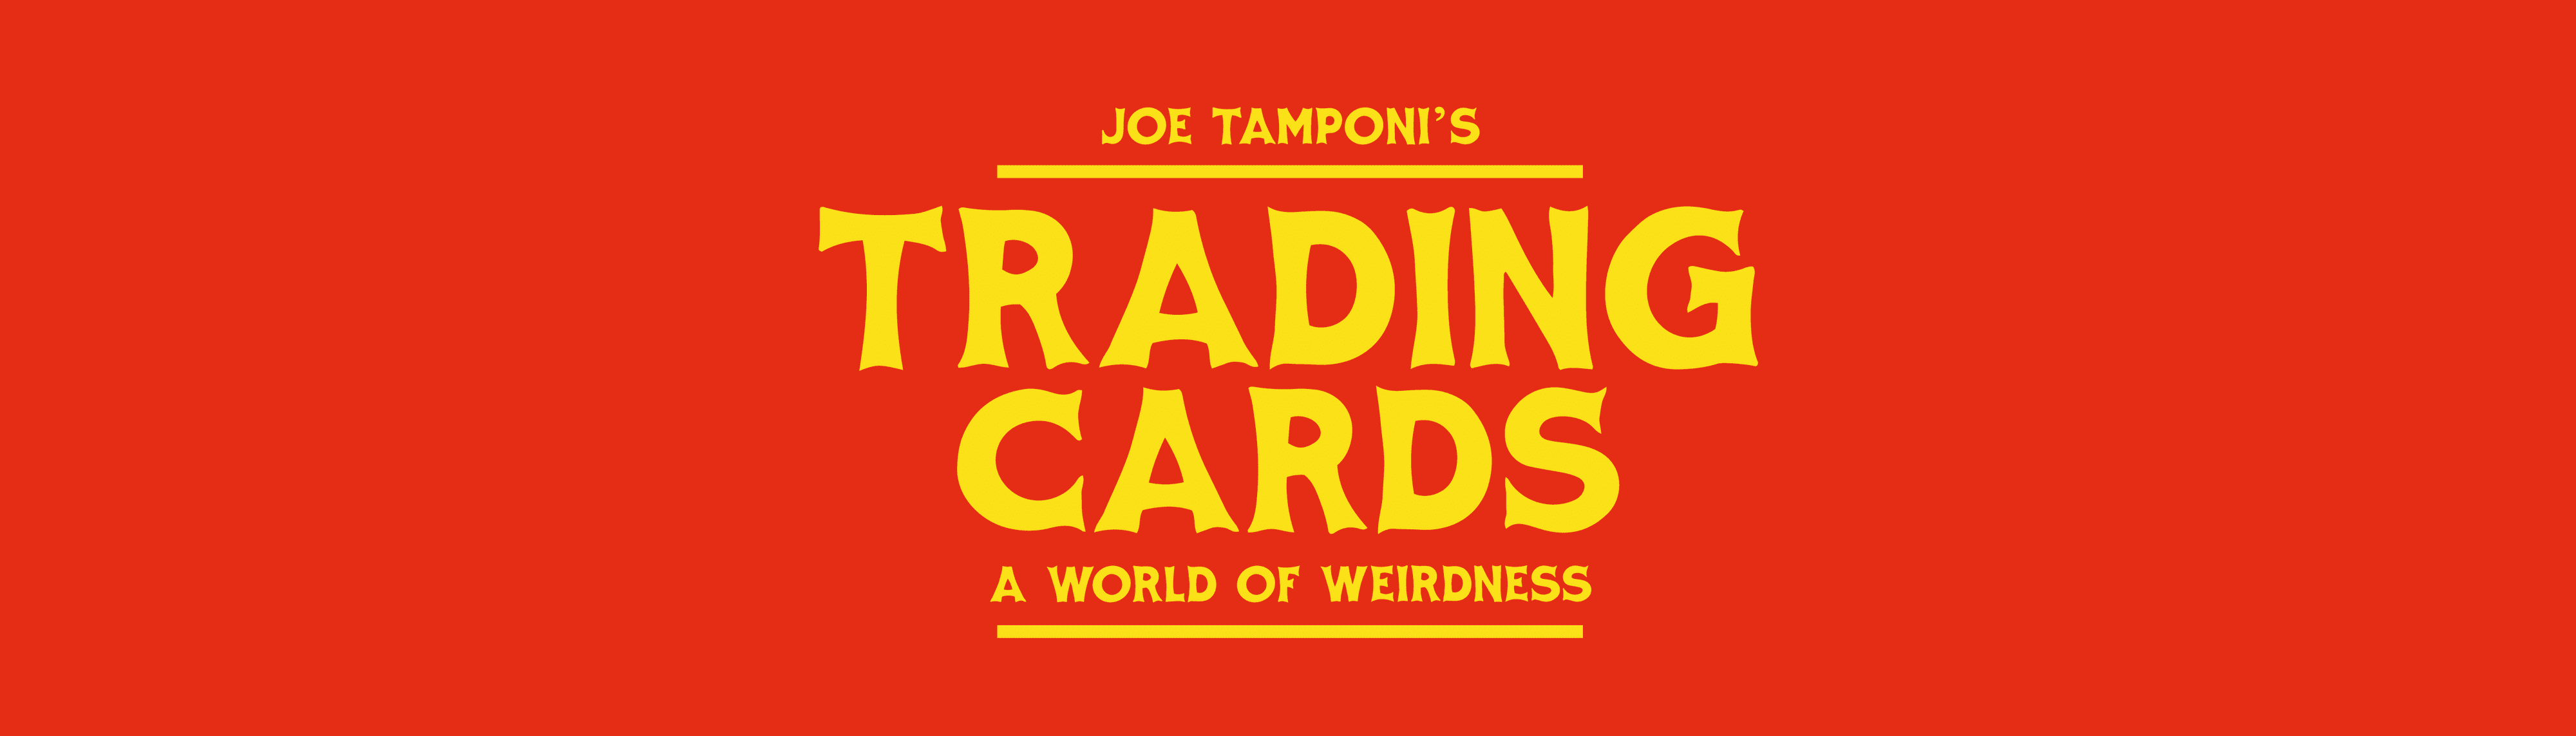 Joe Tamponi: Trading Cards